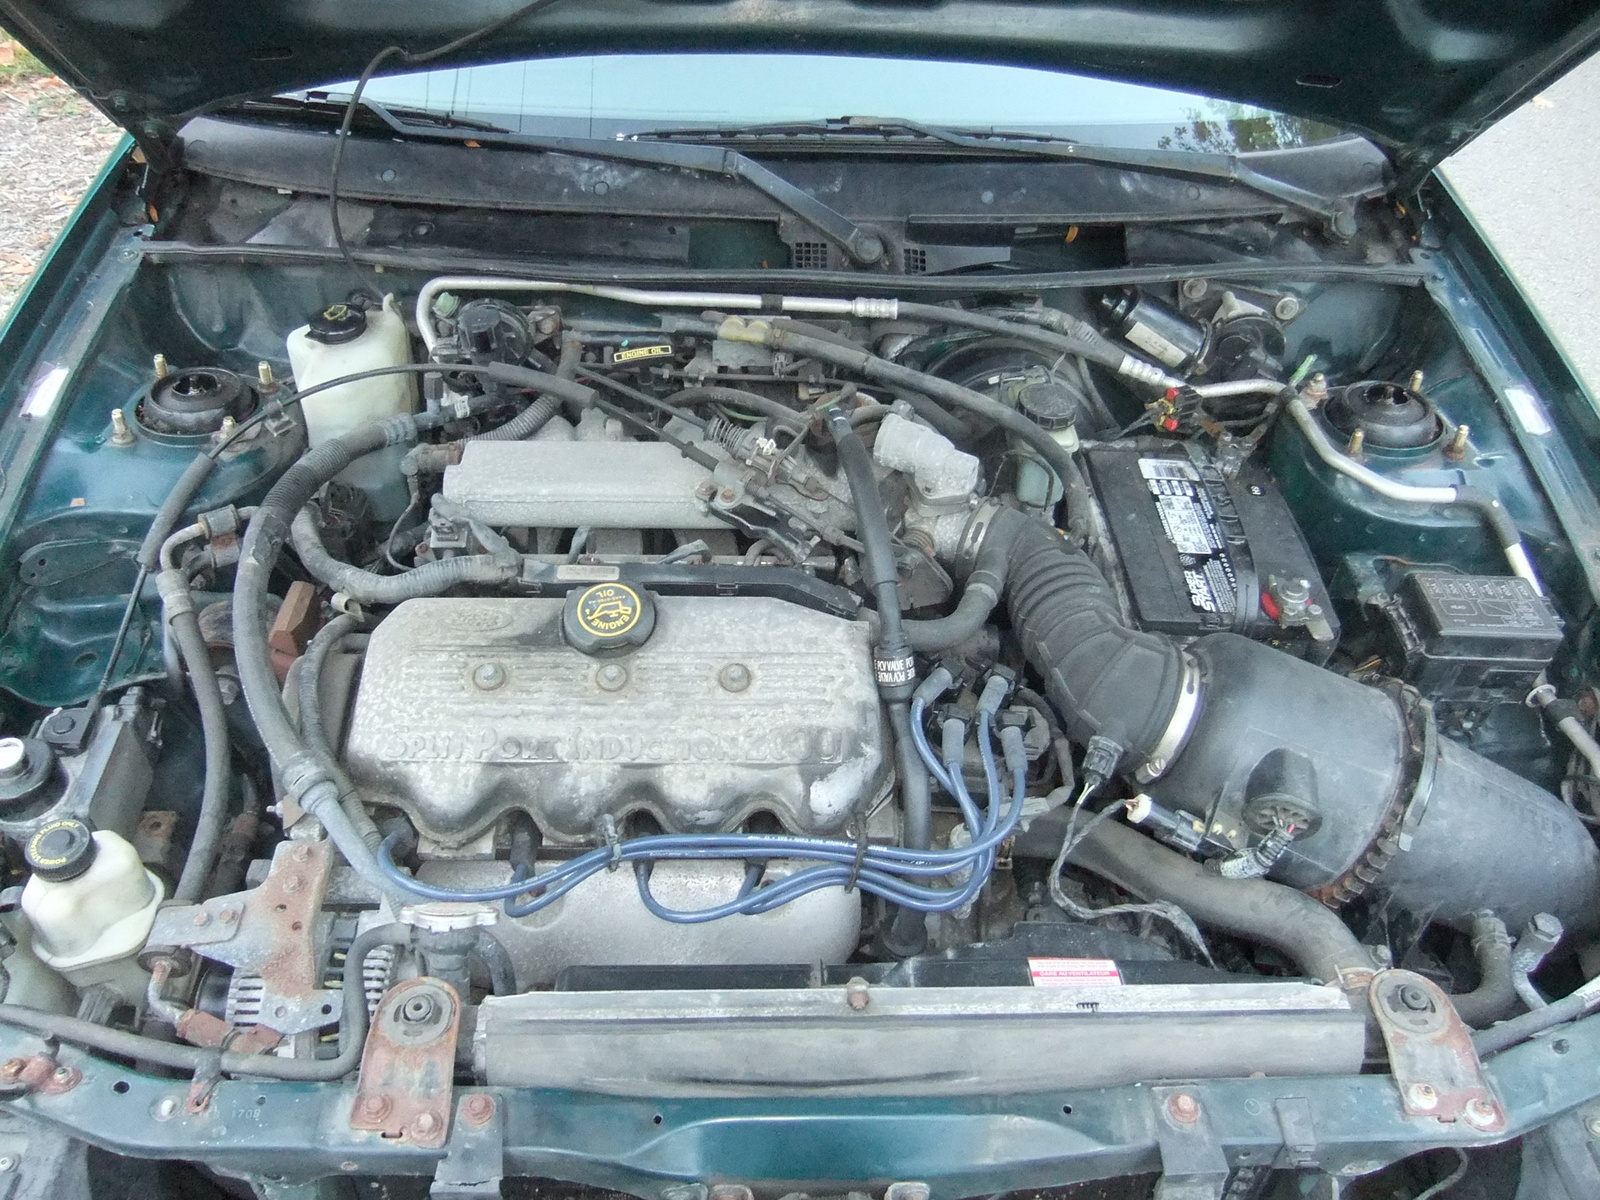 1998 Ford escort rebuilt engine #8